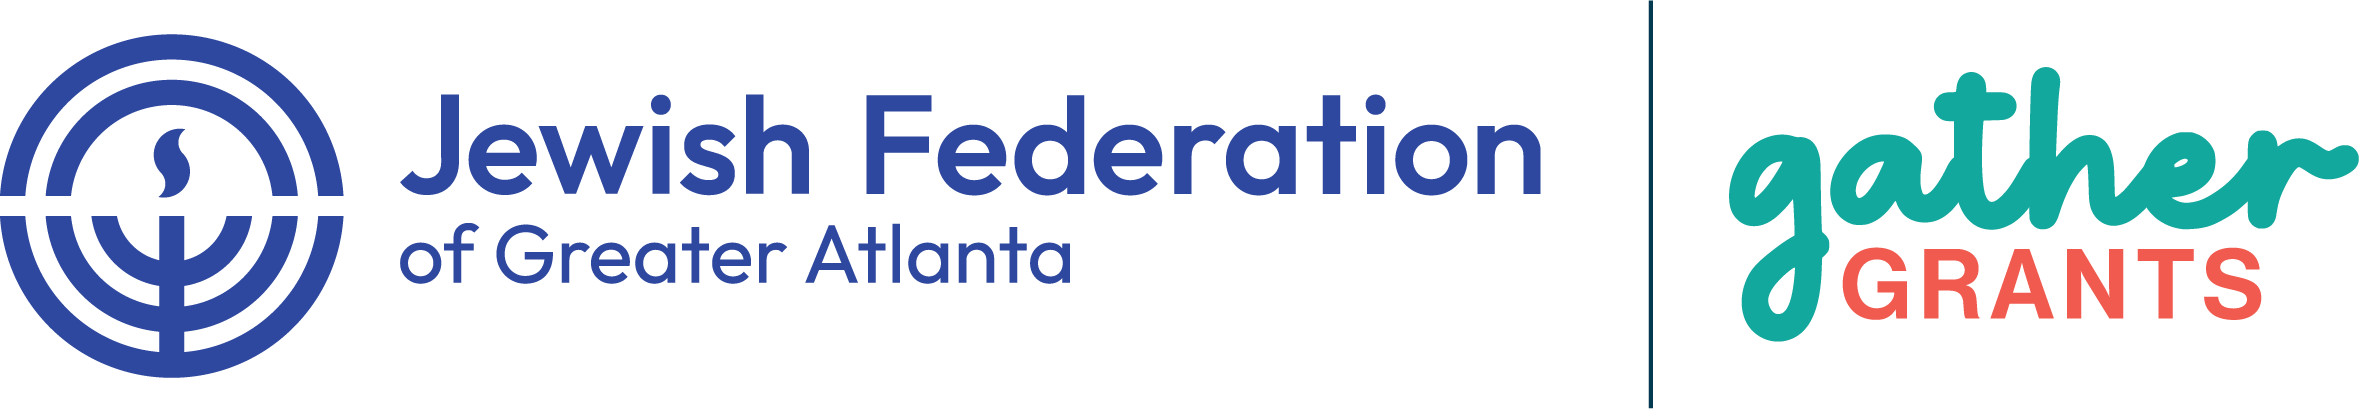 federation-of-greater-atlanta-logo-with-gather-grants-logo